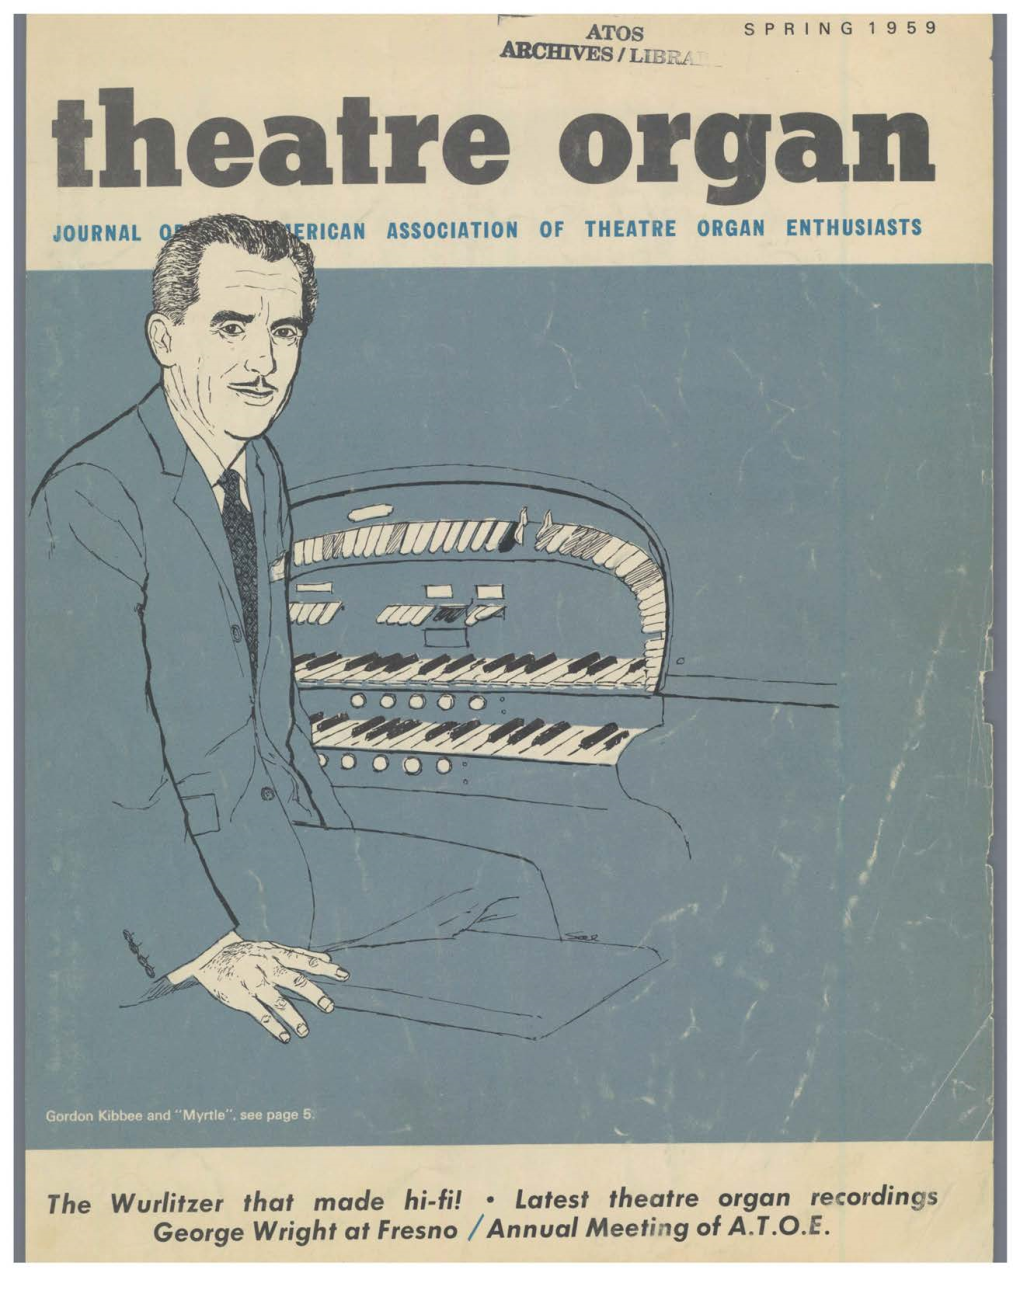 Latest Theatre Organ Recordin S George Wright at Fresno / Annual Meeti G of A